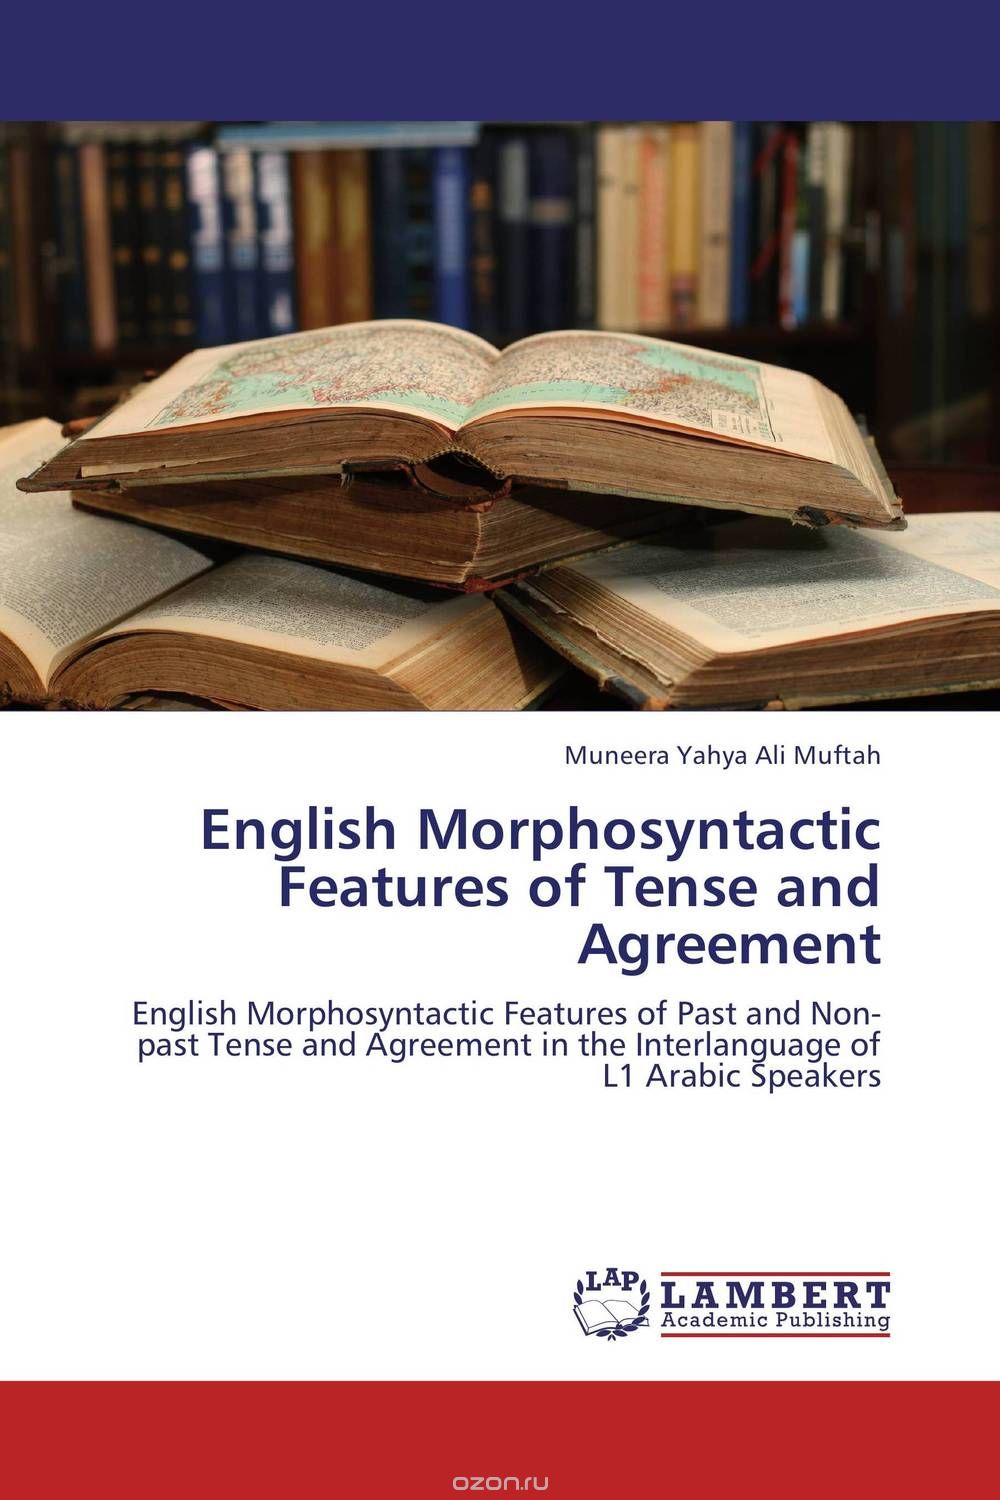 Скачать книгу "English Morphosyntactic Features of Tense and Agreement"